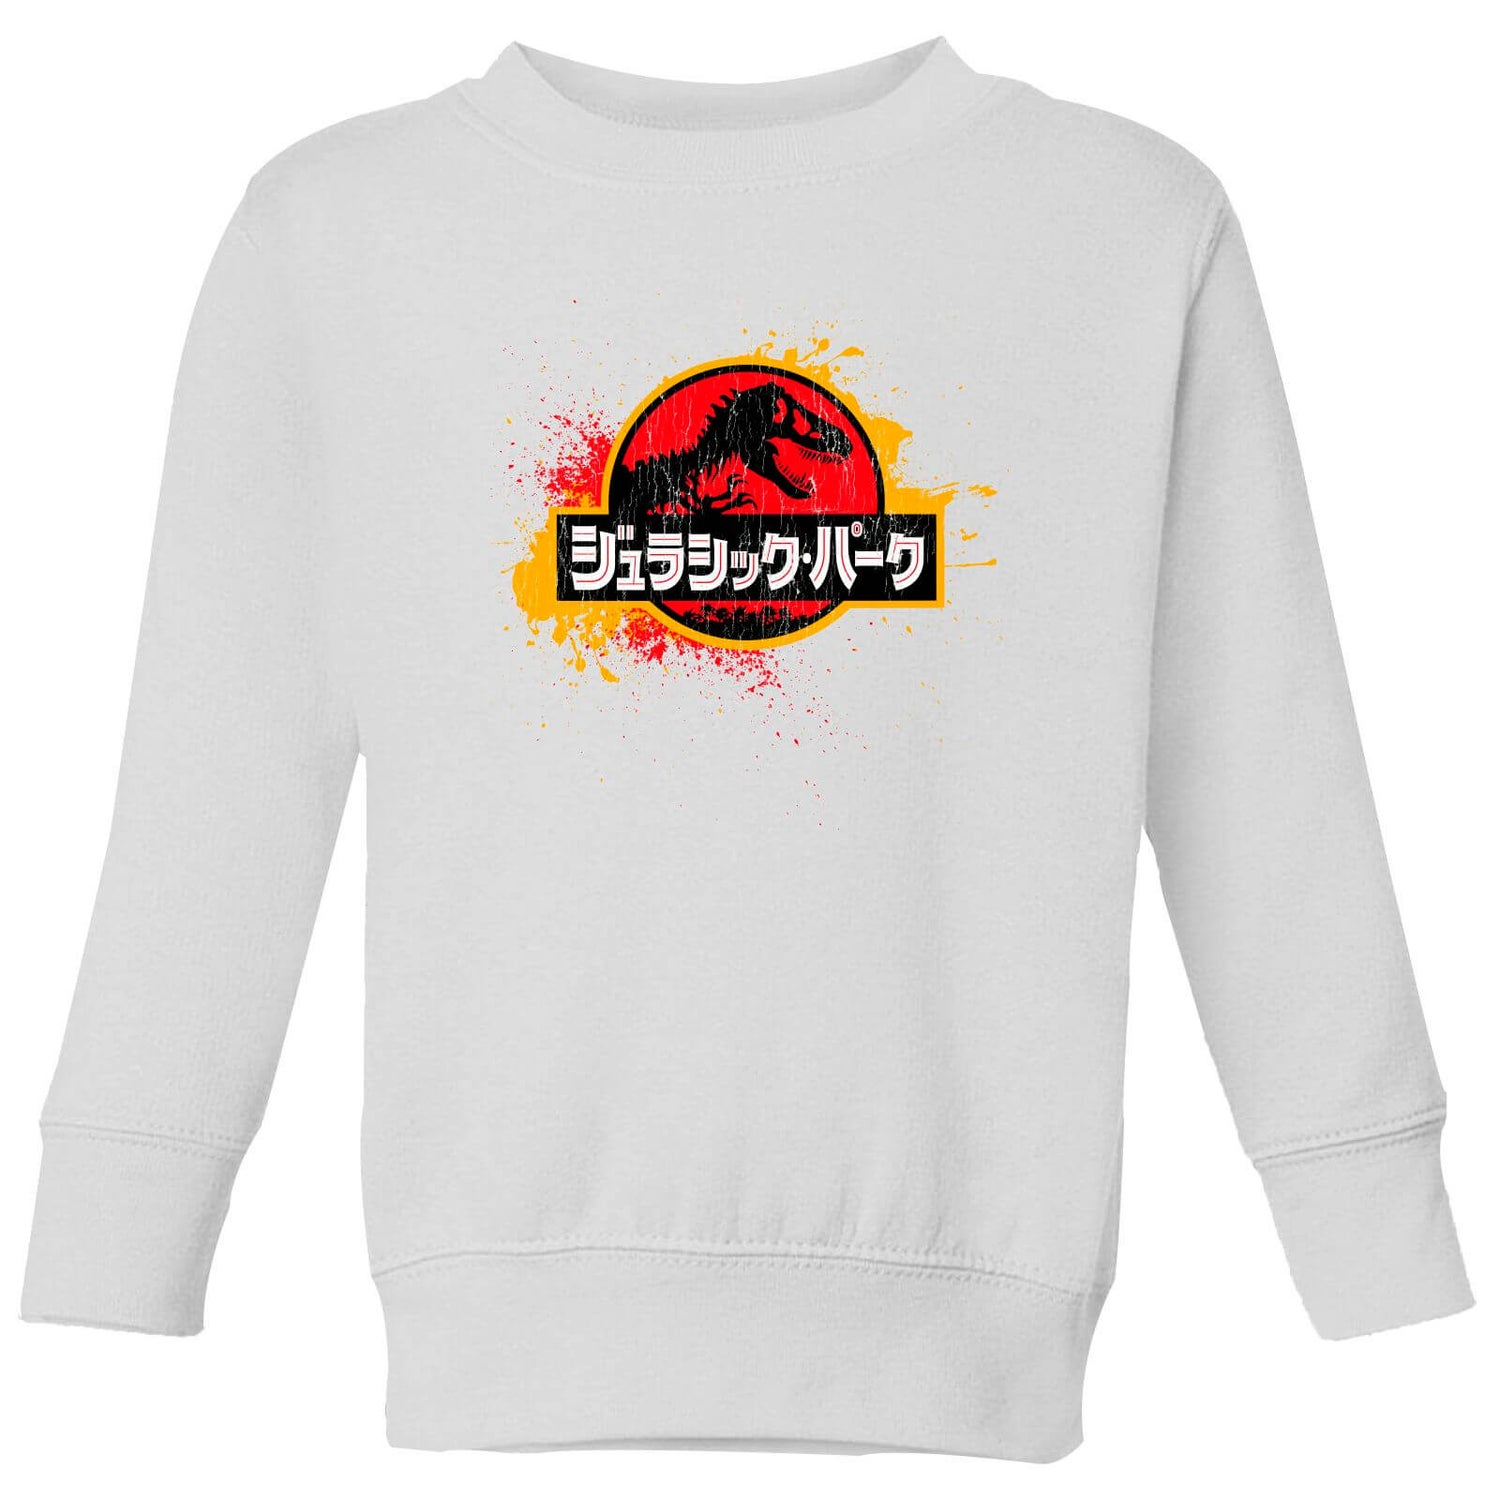 Jurassic Park Kids' Sweatshirt - White